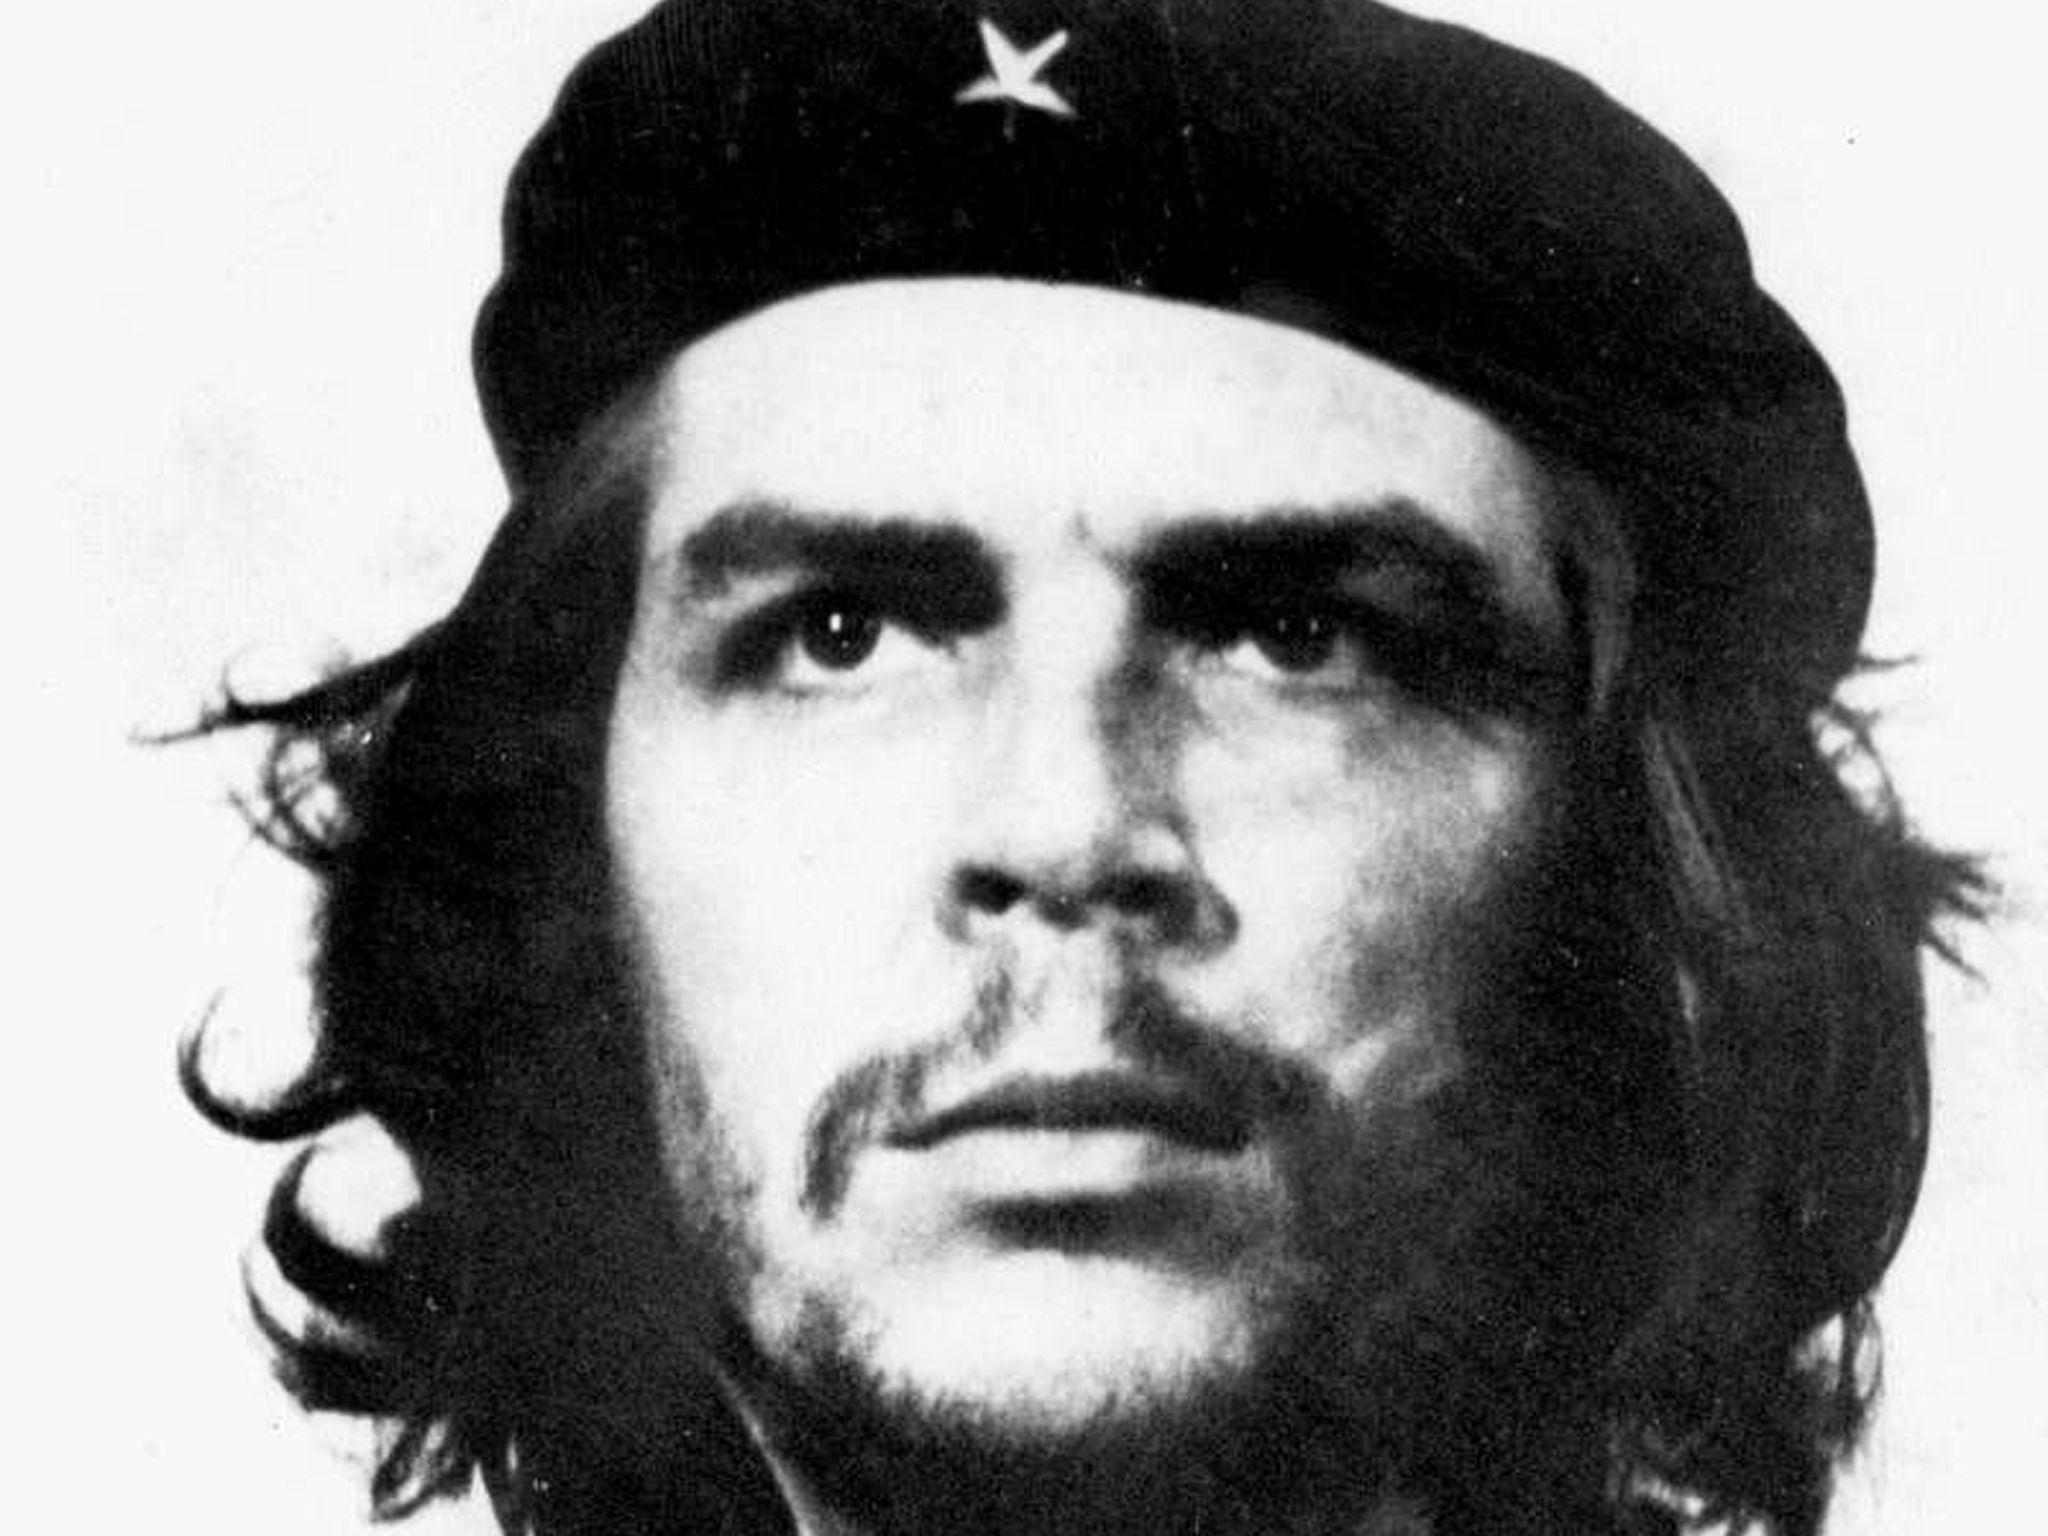 HD Che Guevara Wallpaper and Photo. HD Celebrities Wallpaper